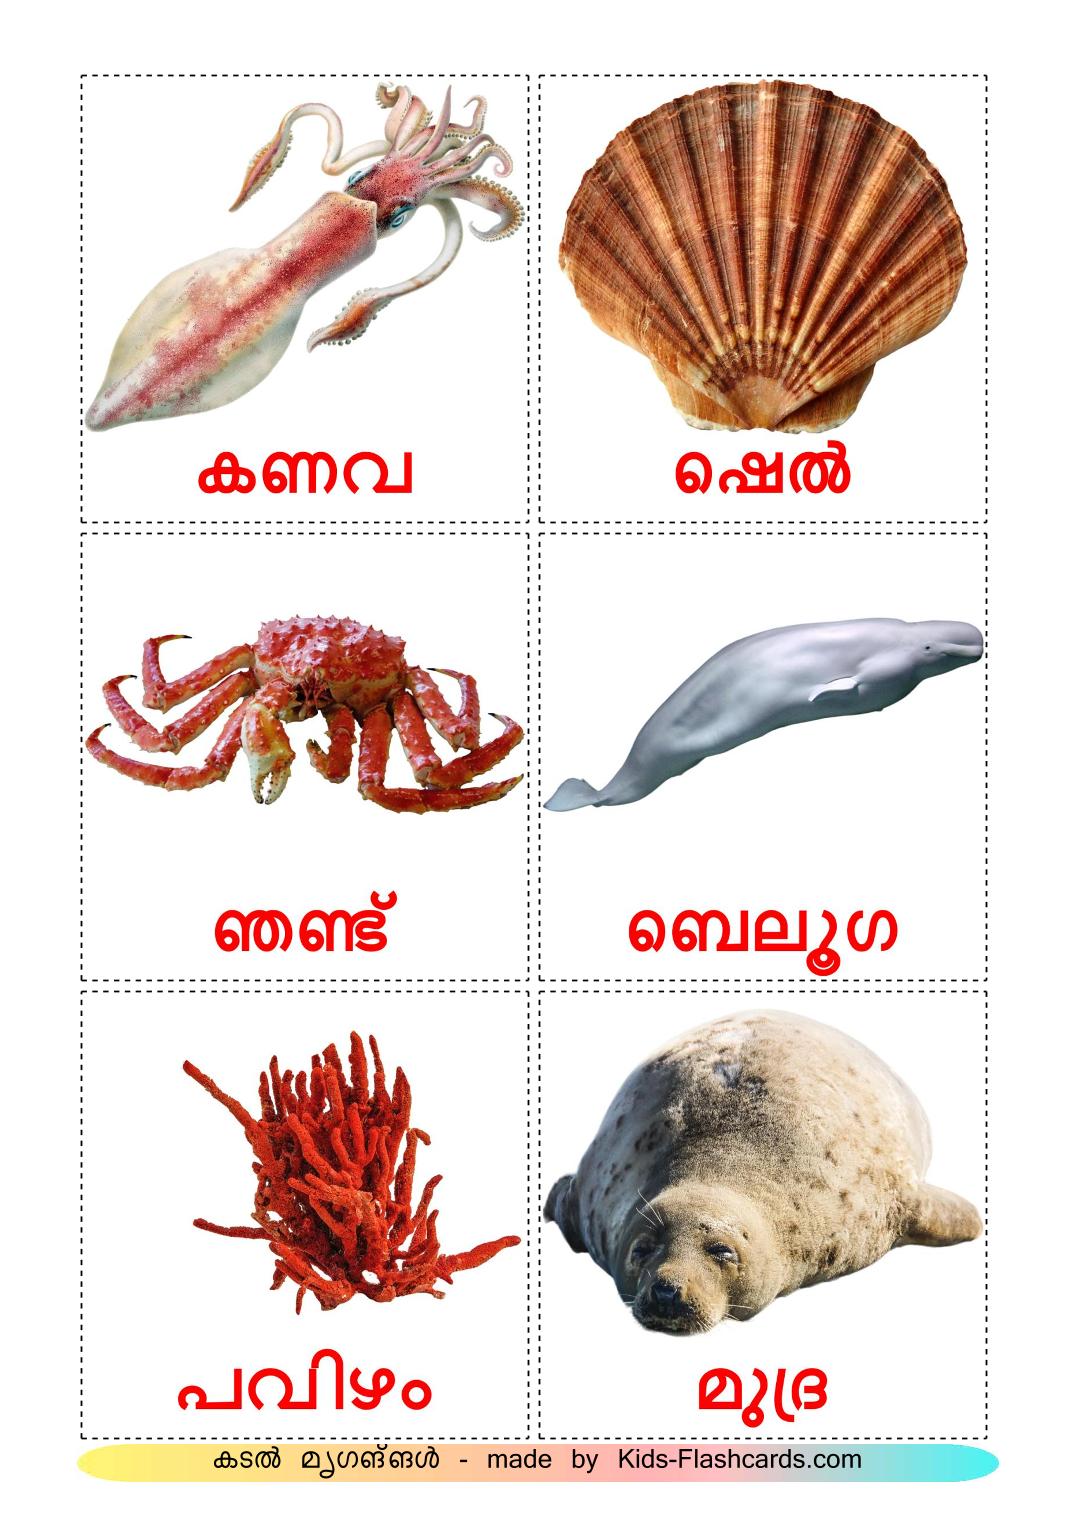 Animales Marinos - 29 fichas de malayalam para imprimir gratis 